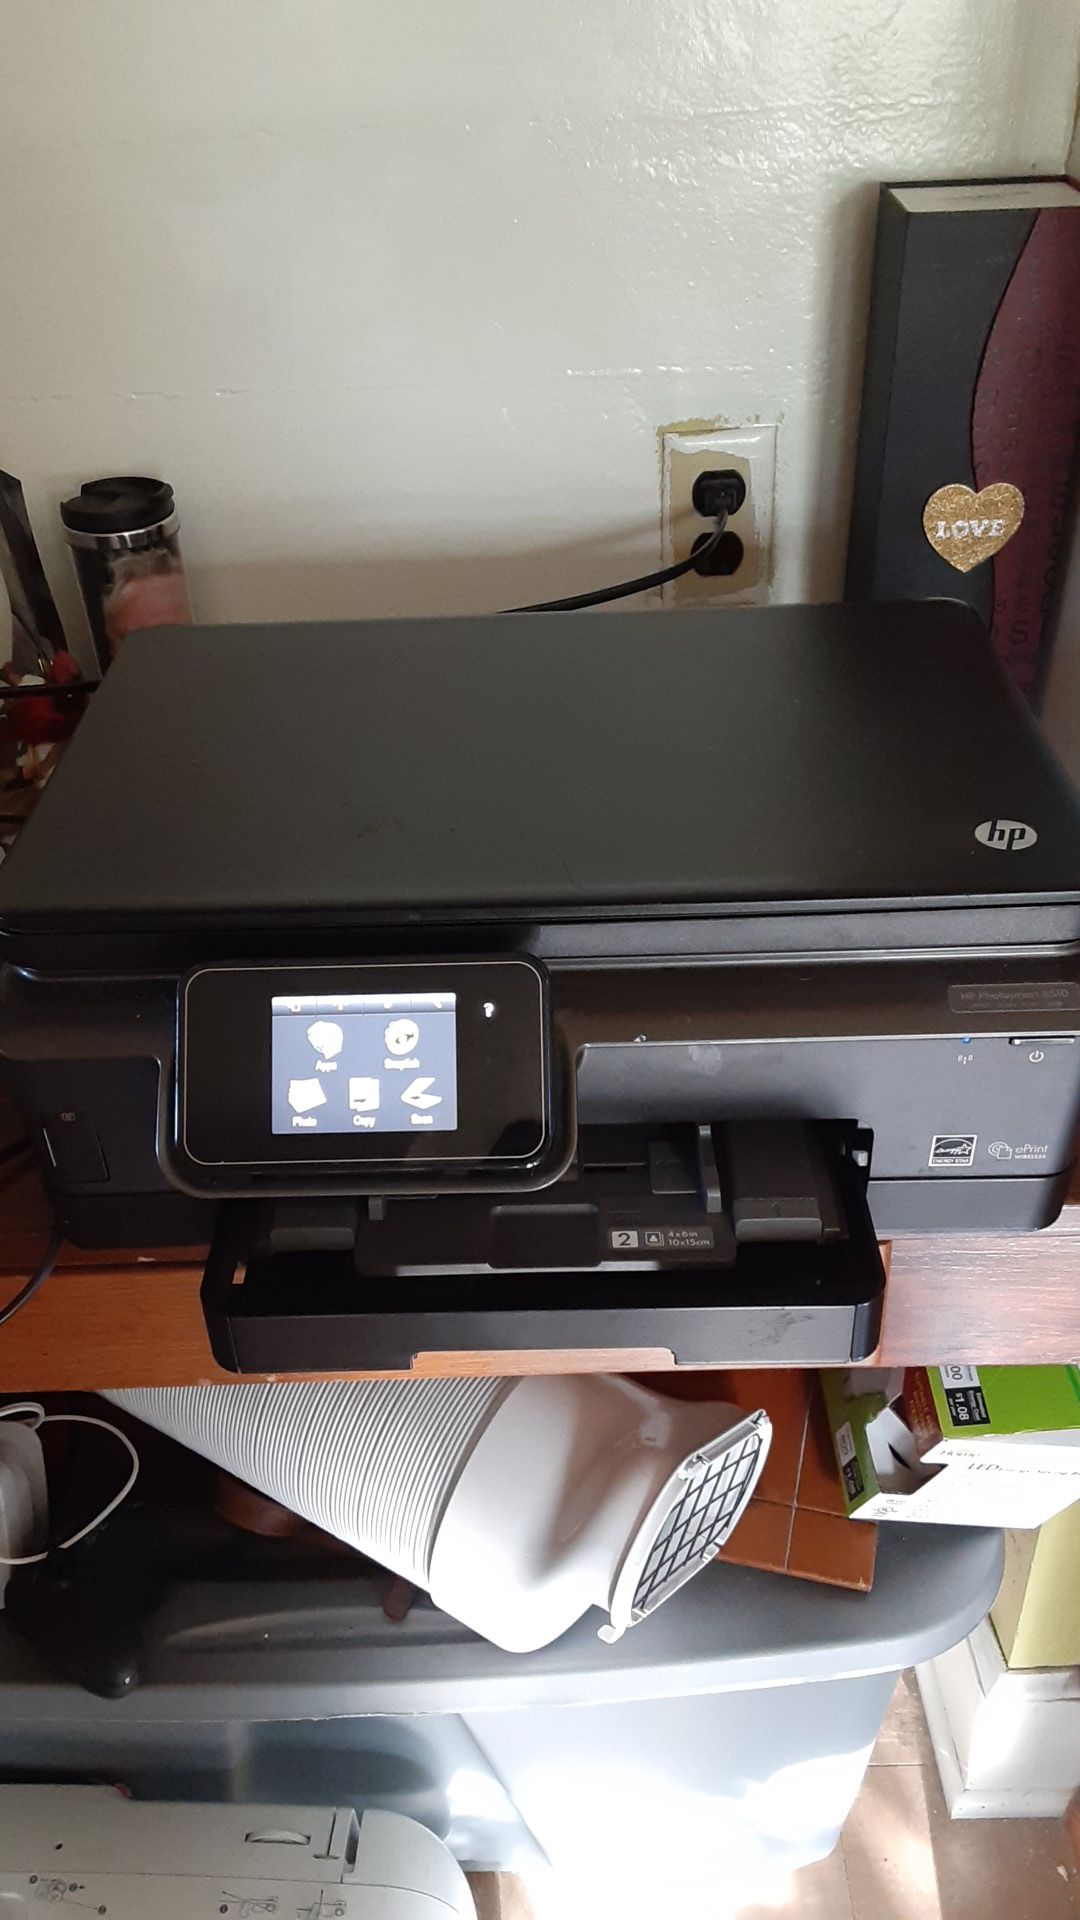 HP Photosmart 6510 printer